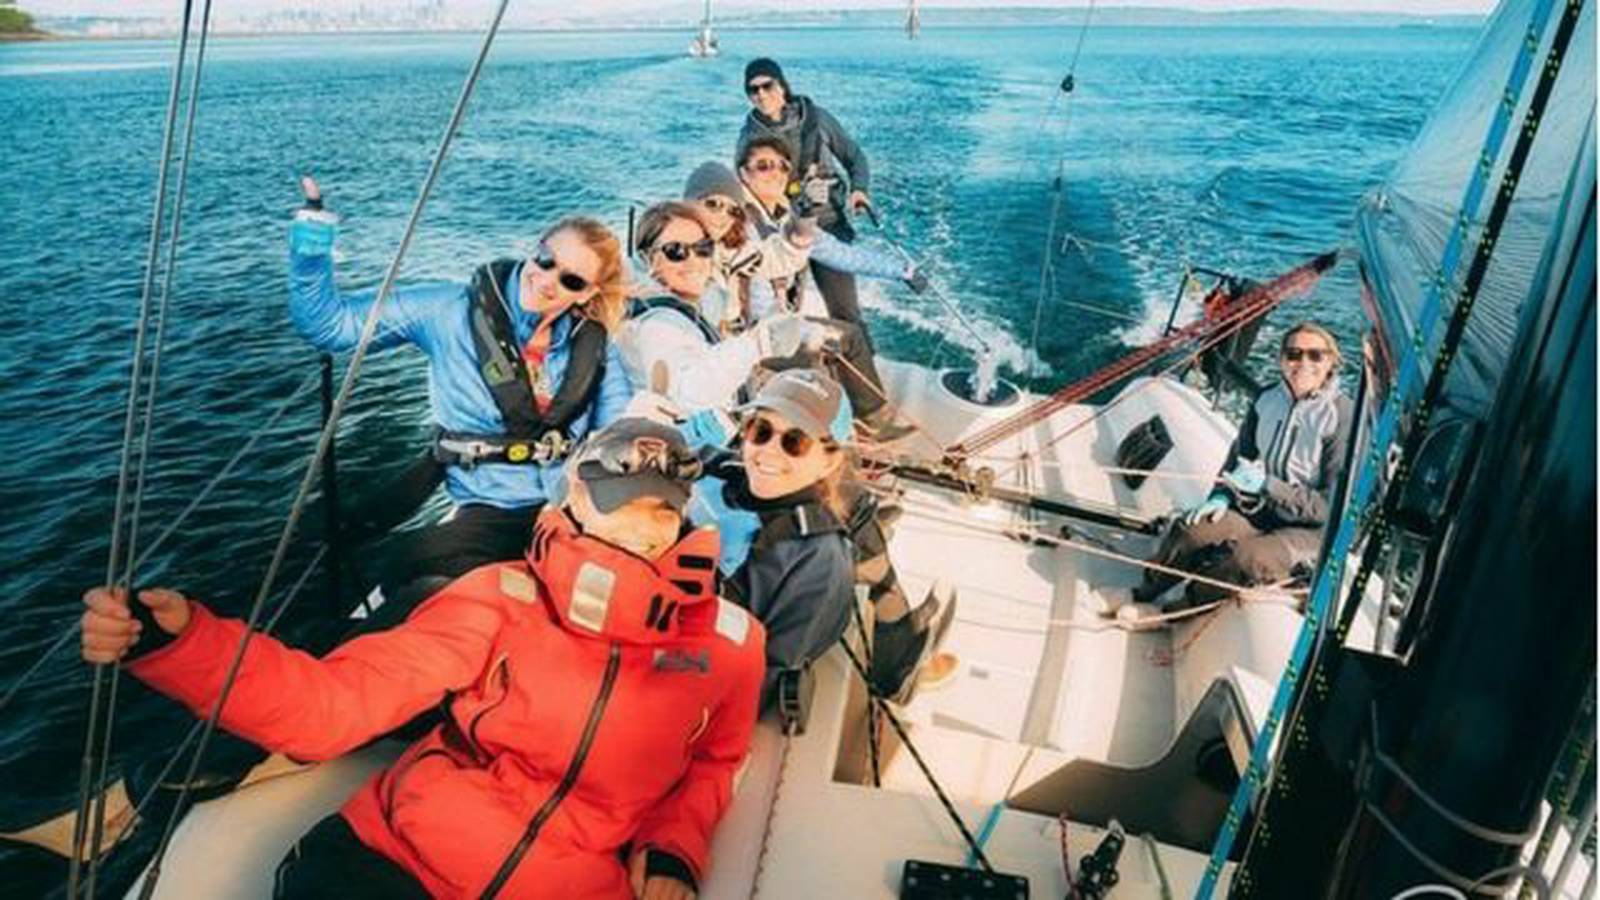 Allwomen sailing team makes history winning Race to Alaska WPXI